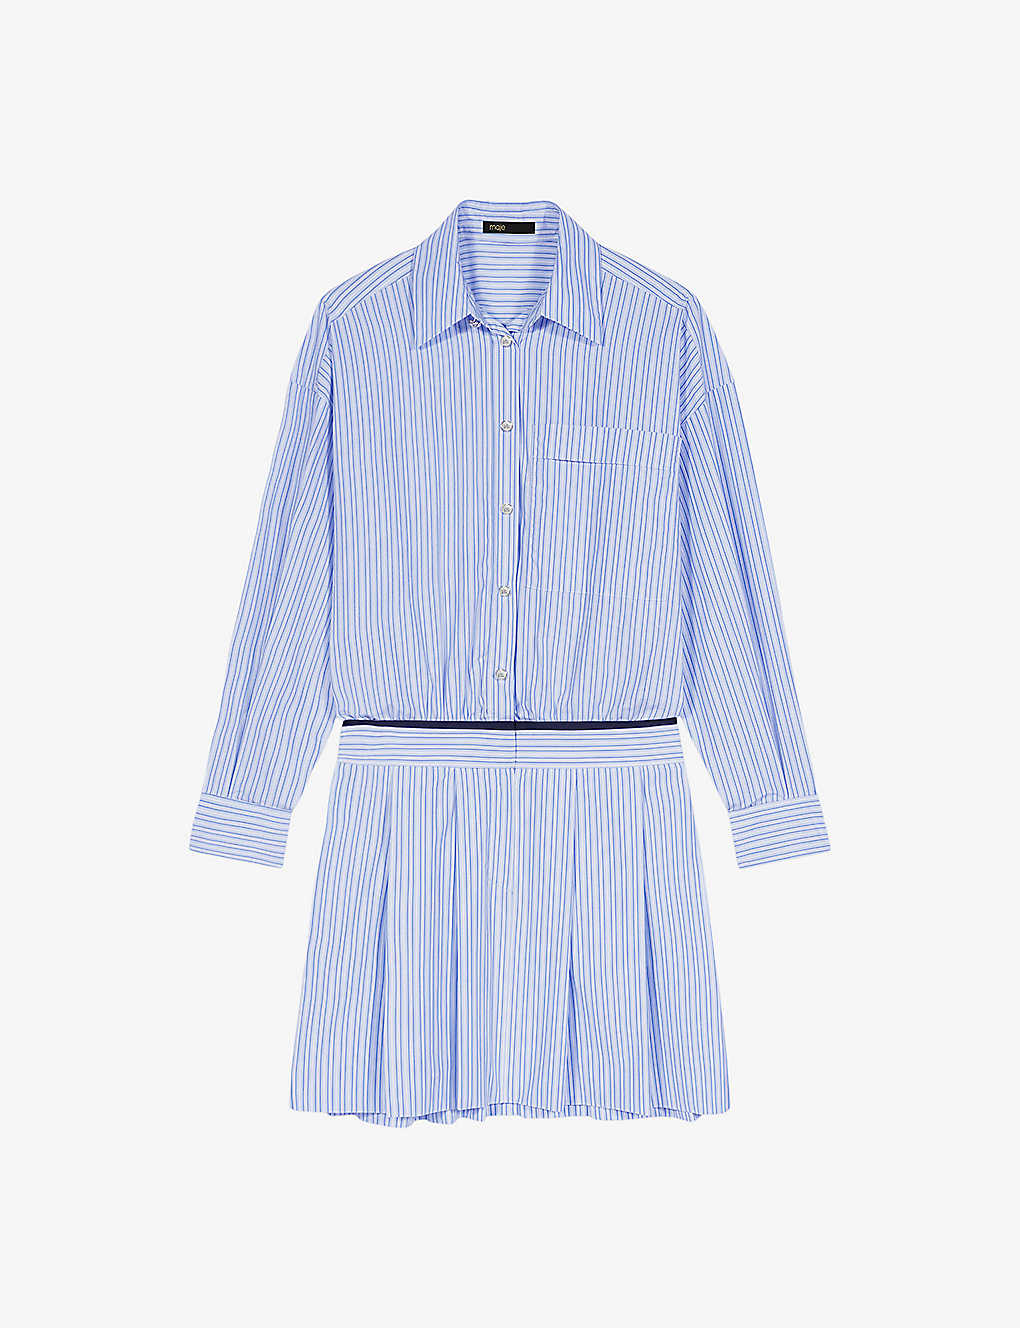 Maje Womens Bleus Striped Patch-pocket Cotton Shirt Dress